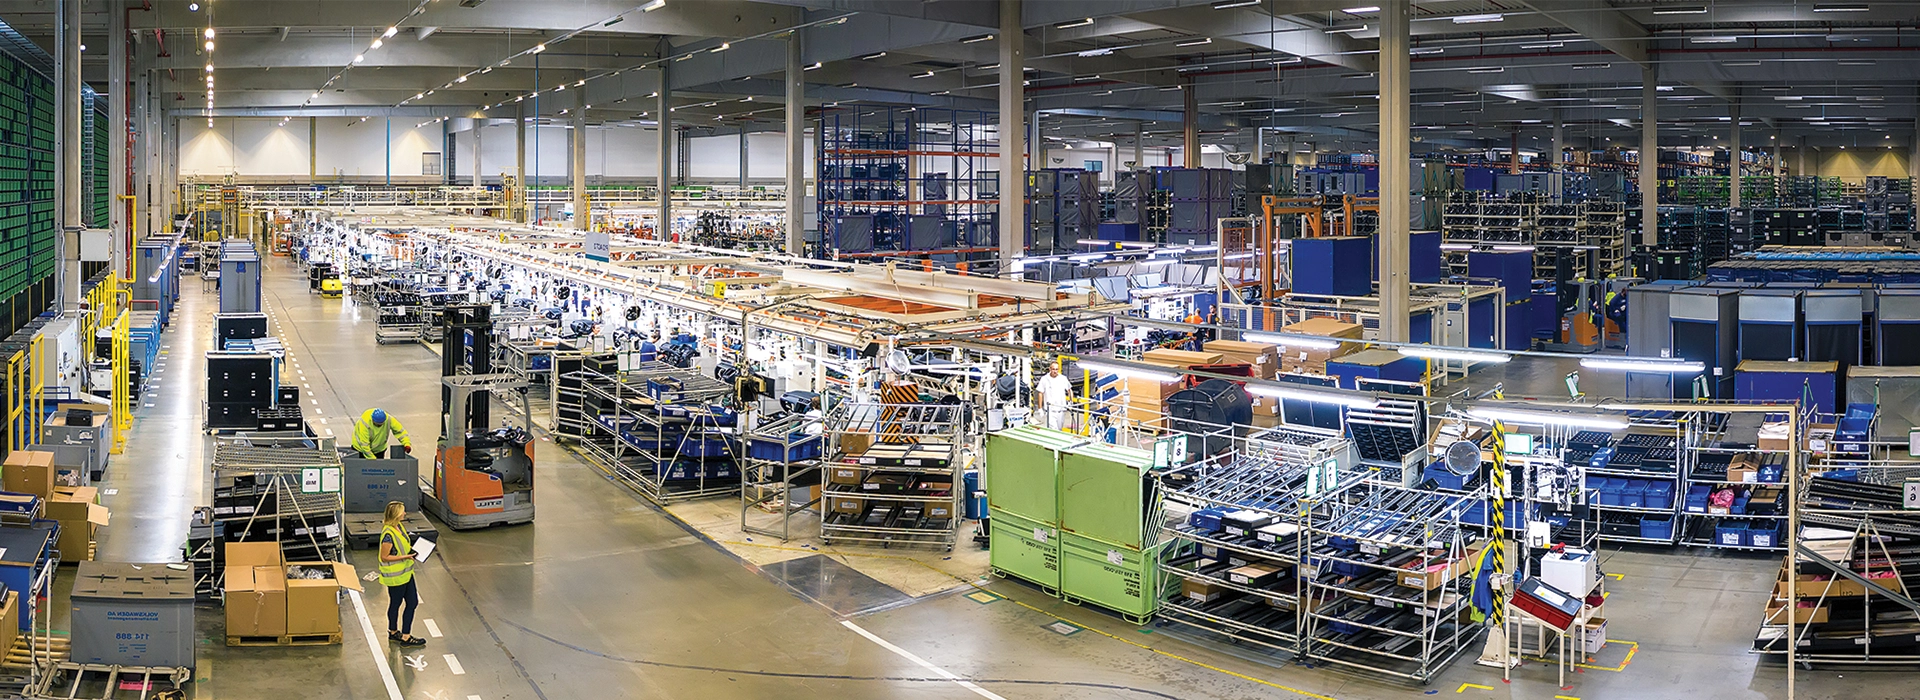 production carts warehouse